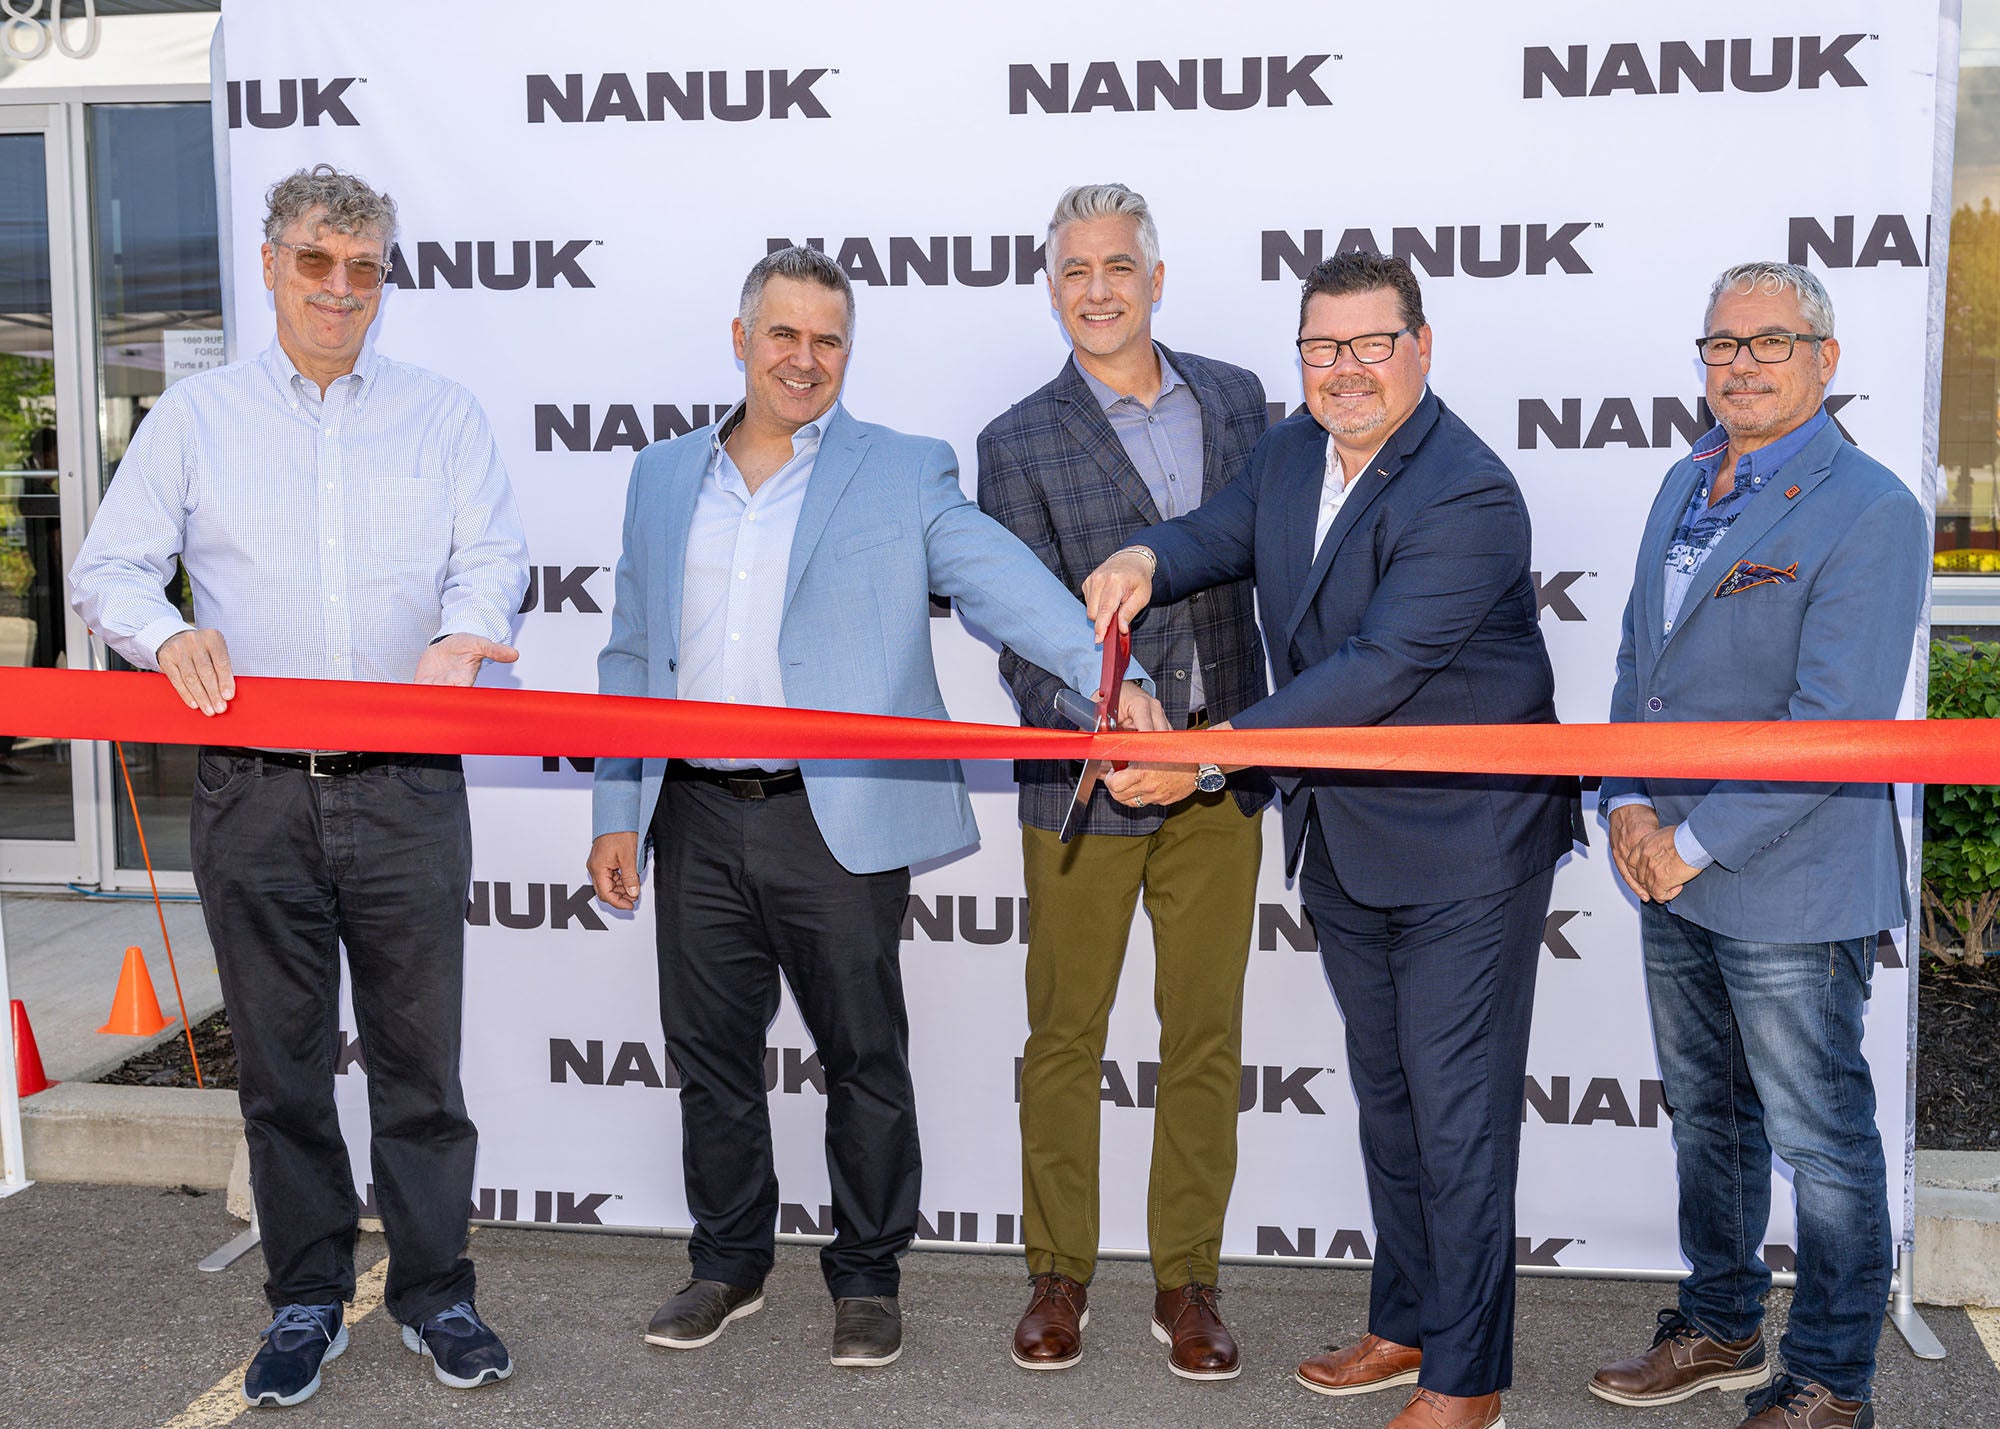 NANUK eröffnet ein neues Innovations- und Kreativitätszentrum